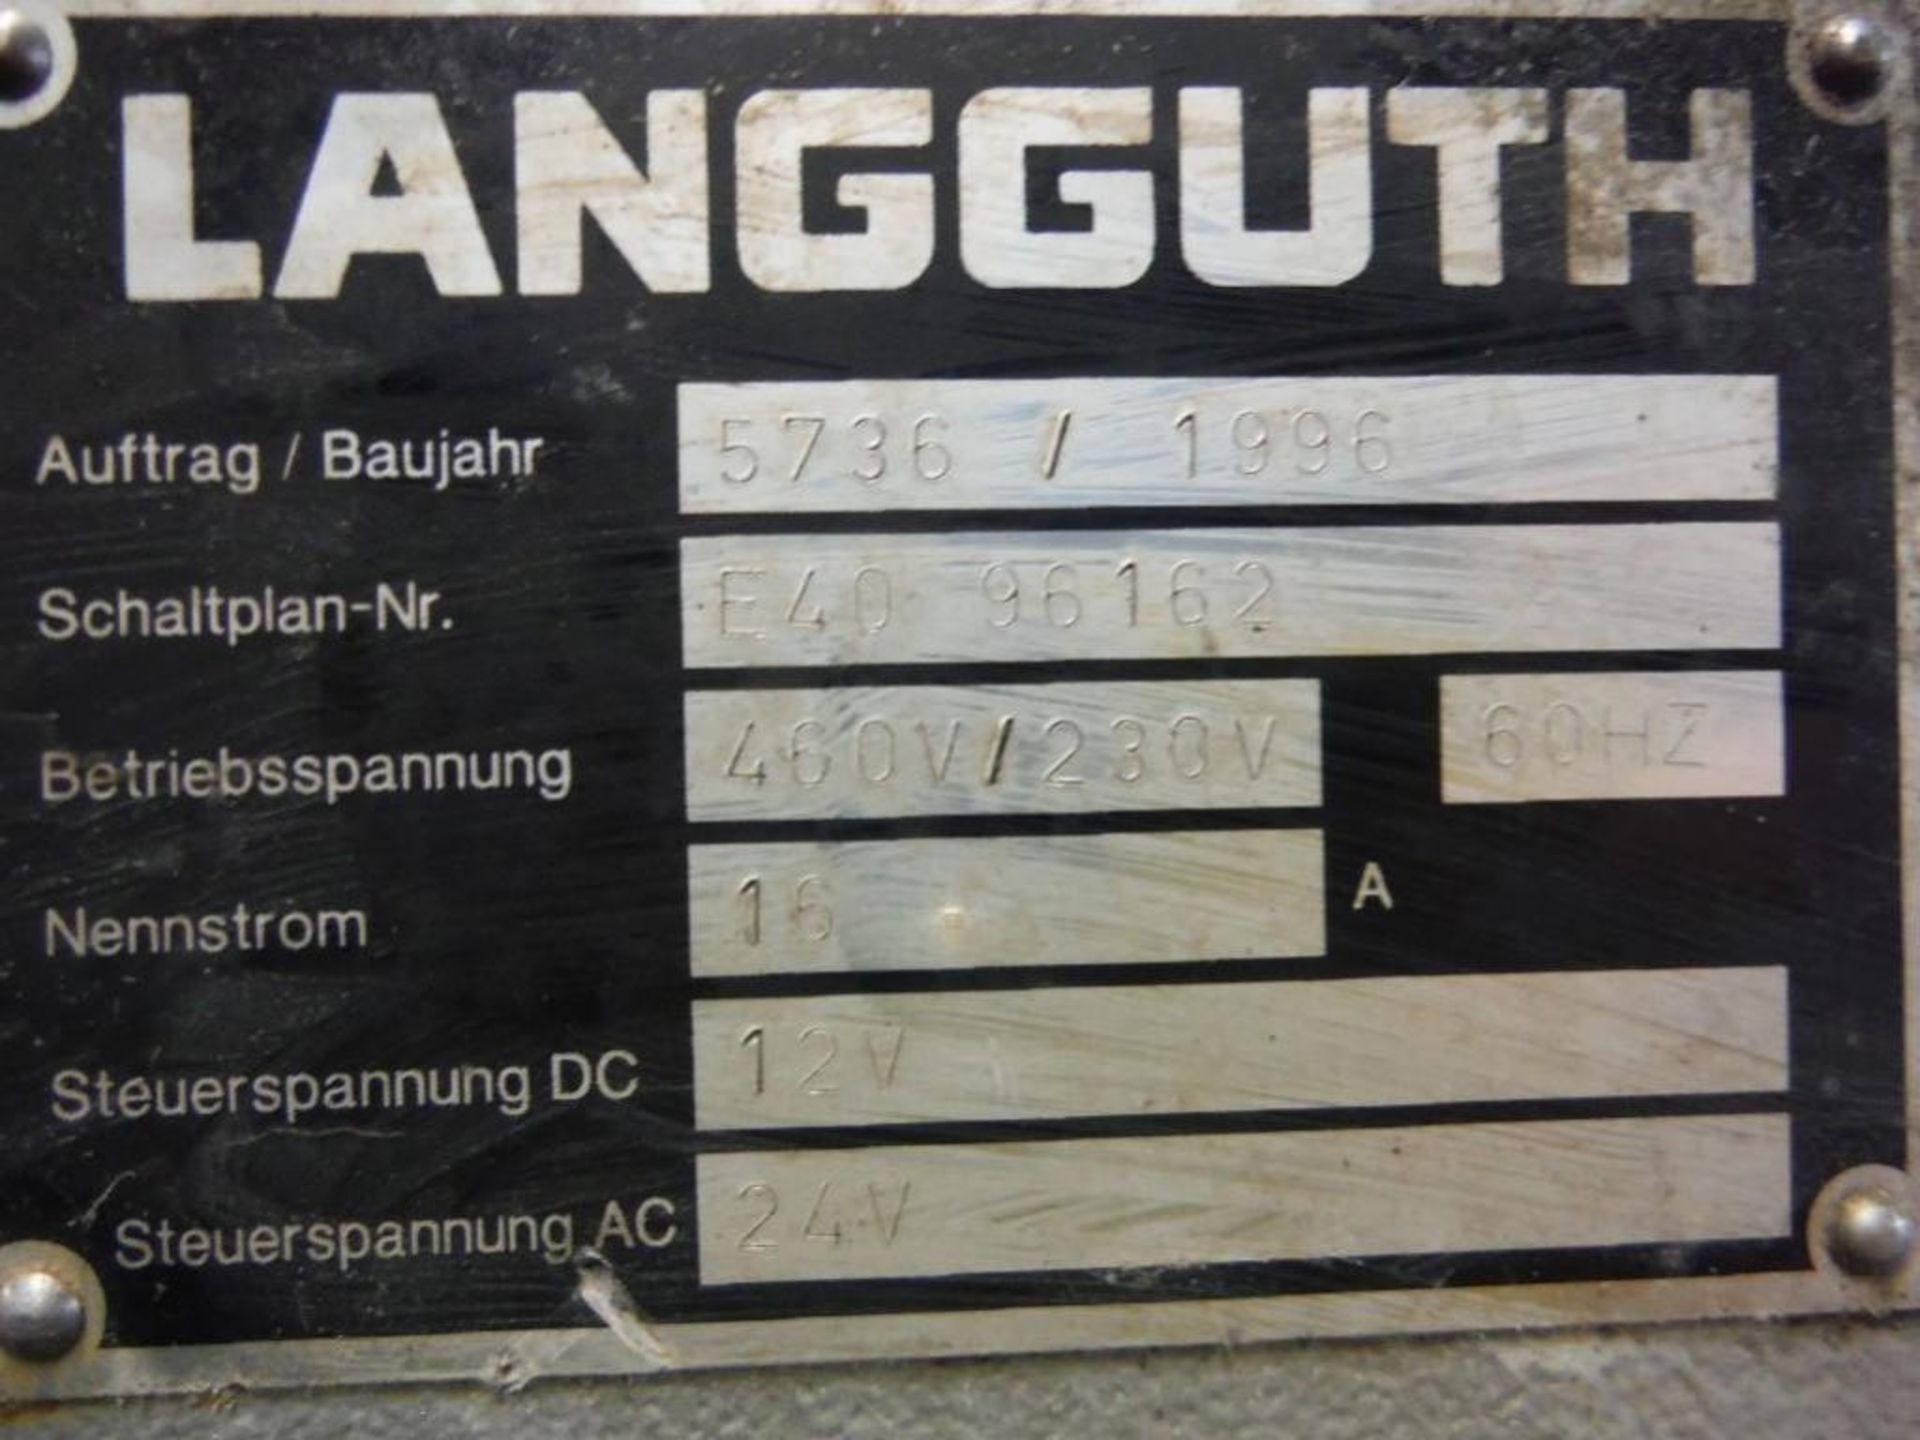 Langguth Labeler w/ Nordson Hot Gluer, Model: 5736/1996, S/N: E40 96162  Rigging Fee: $500 - Image 7 of 8